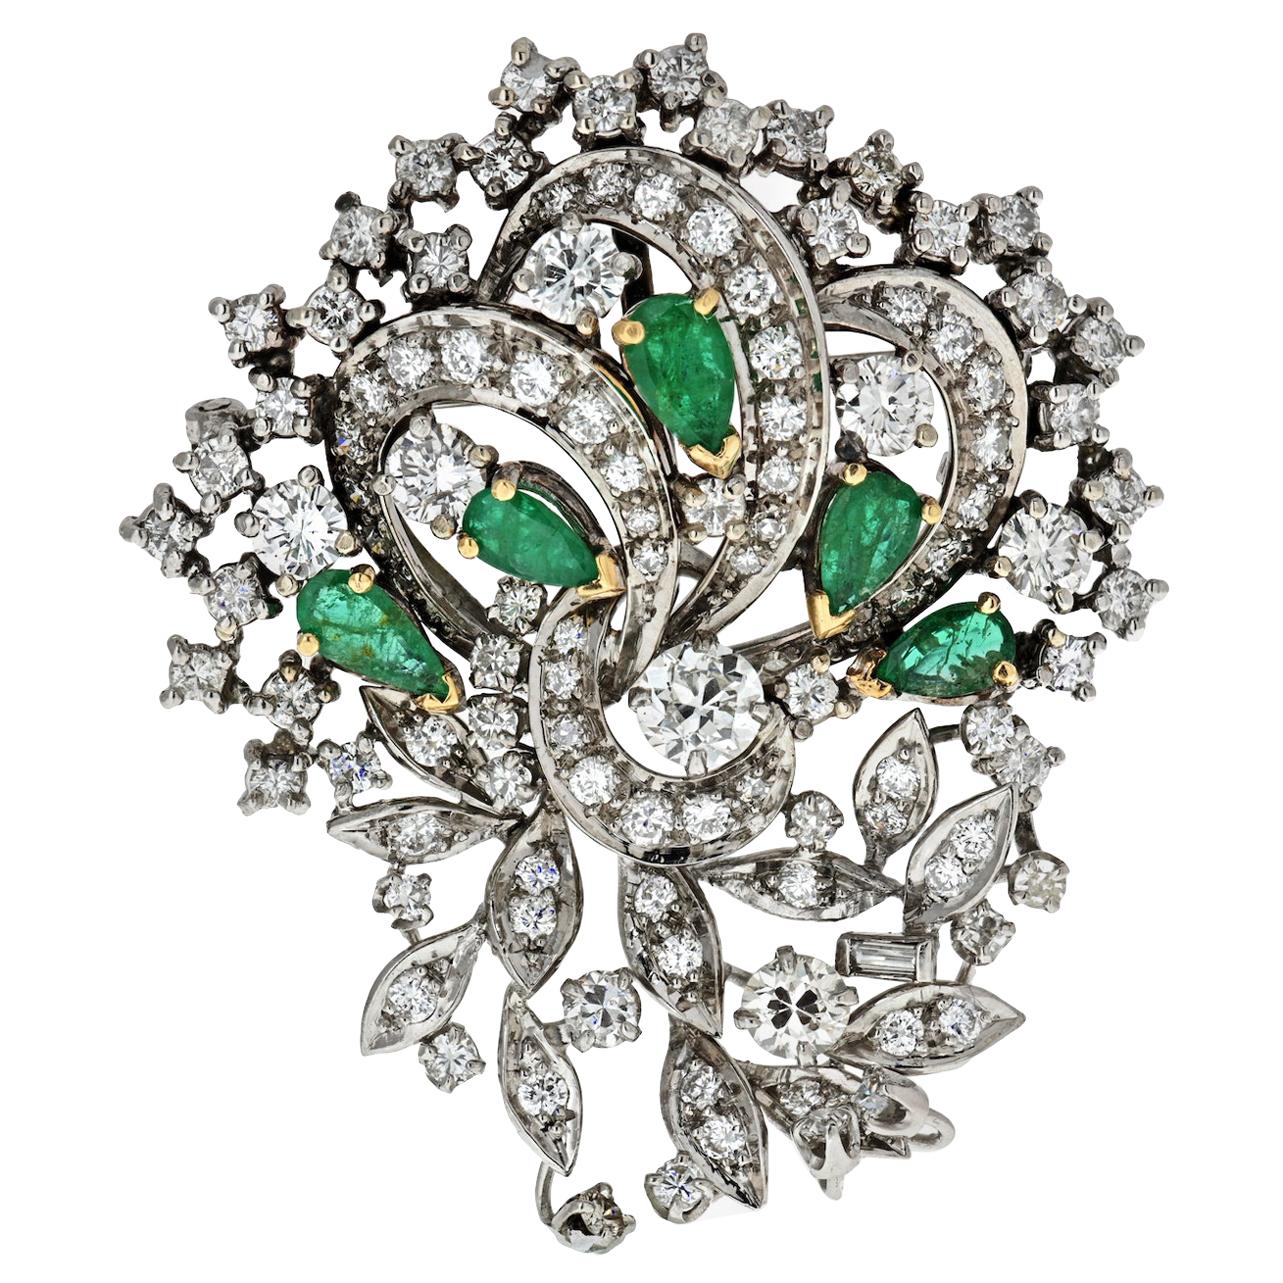 1940s Platinum, Diamond and Green Emerald Brooch